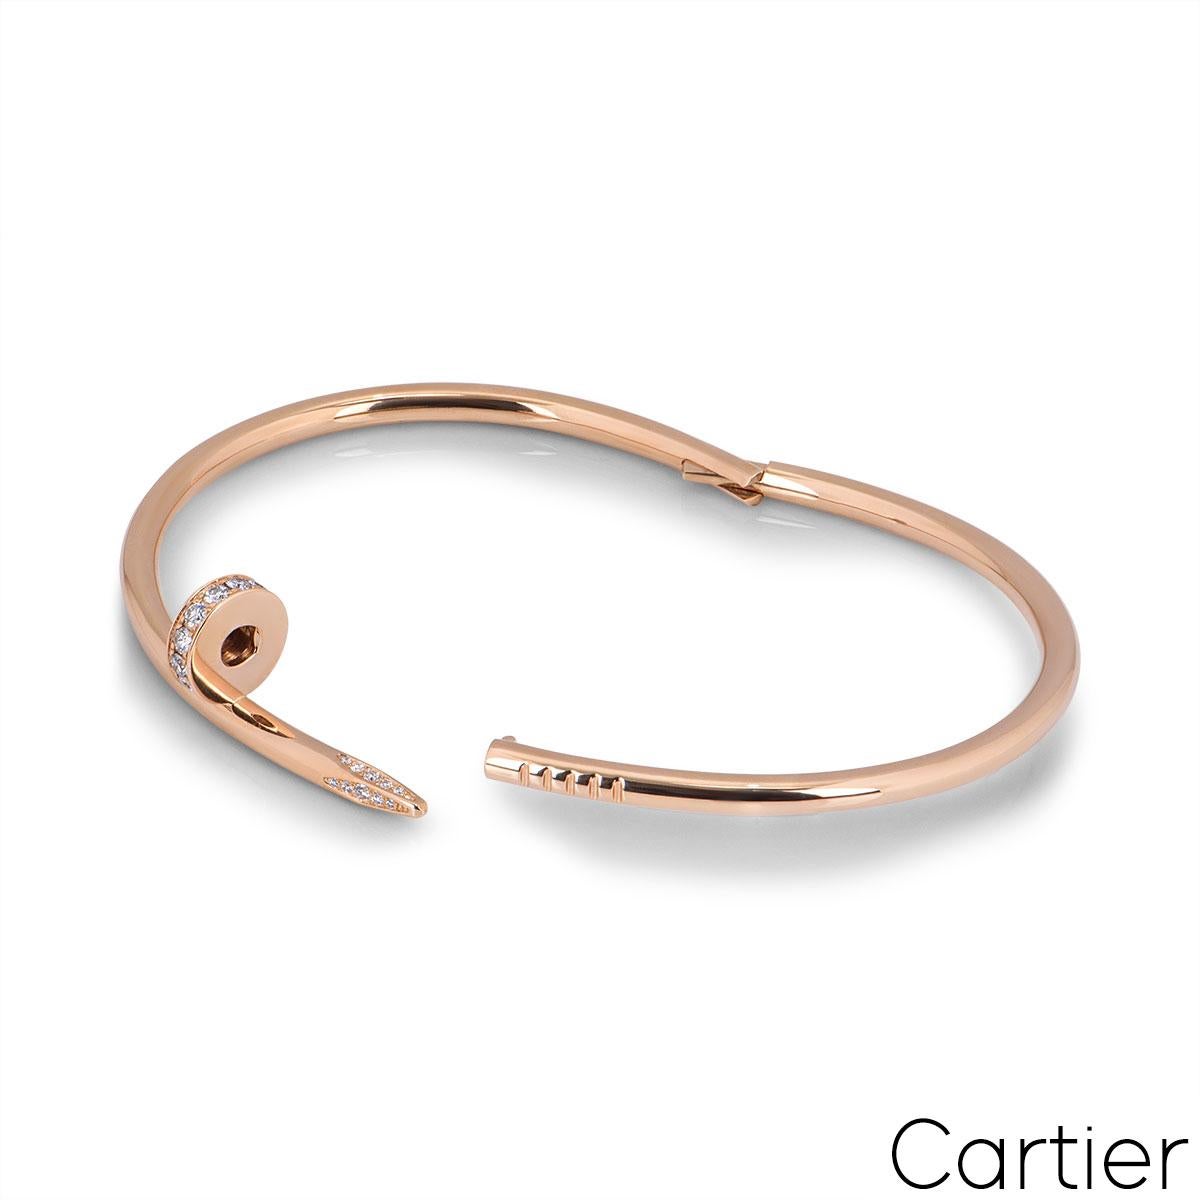 Cartier Rose Gold Diamond Juste Un Clou Bracelet Size 18 B6048518 In Excellent Condition For Sale In London, GB